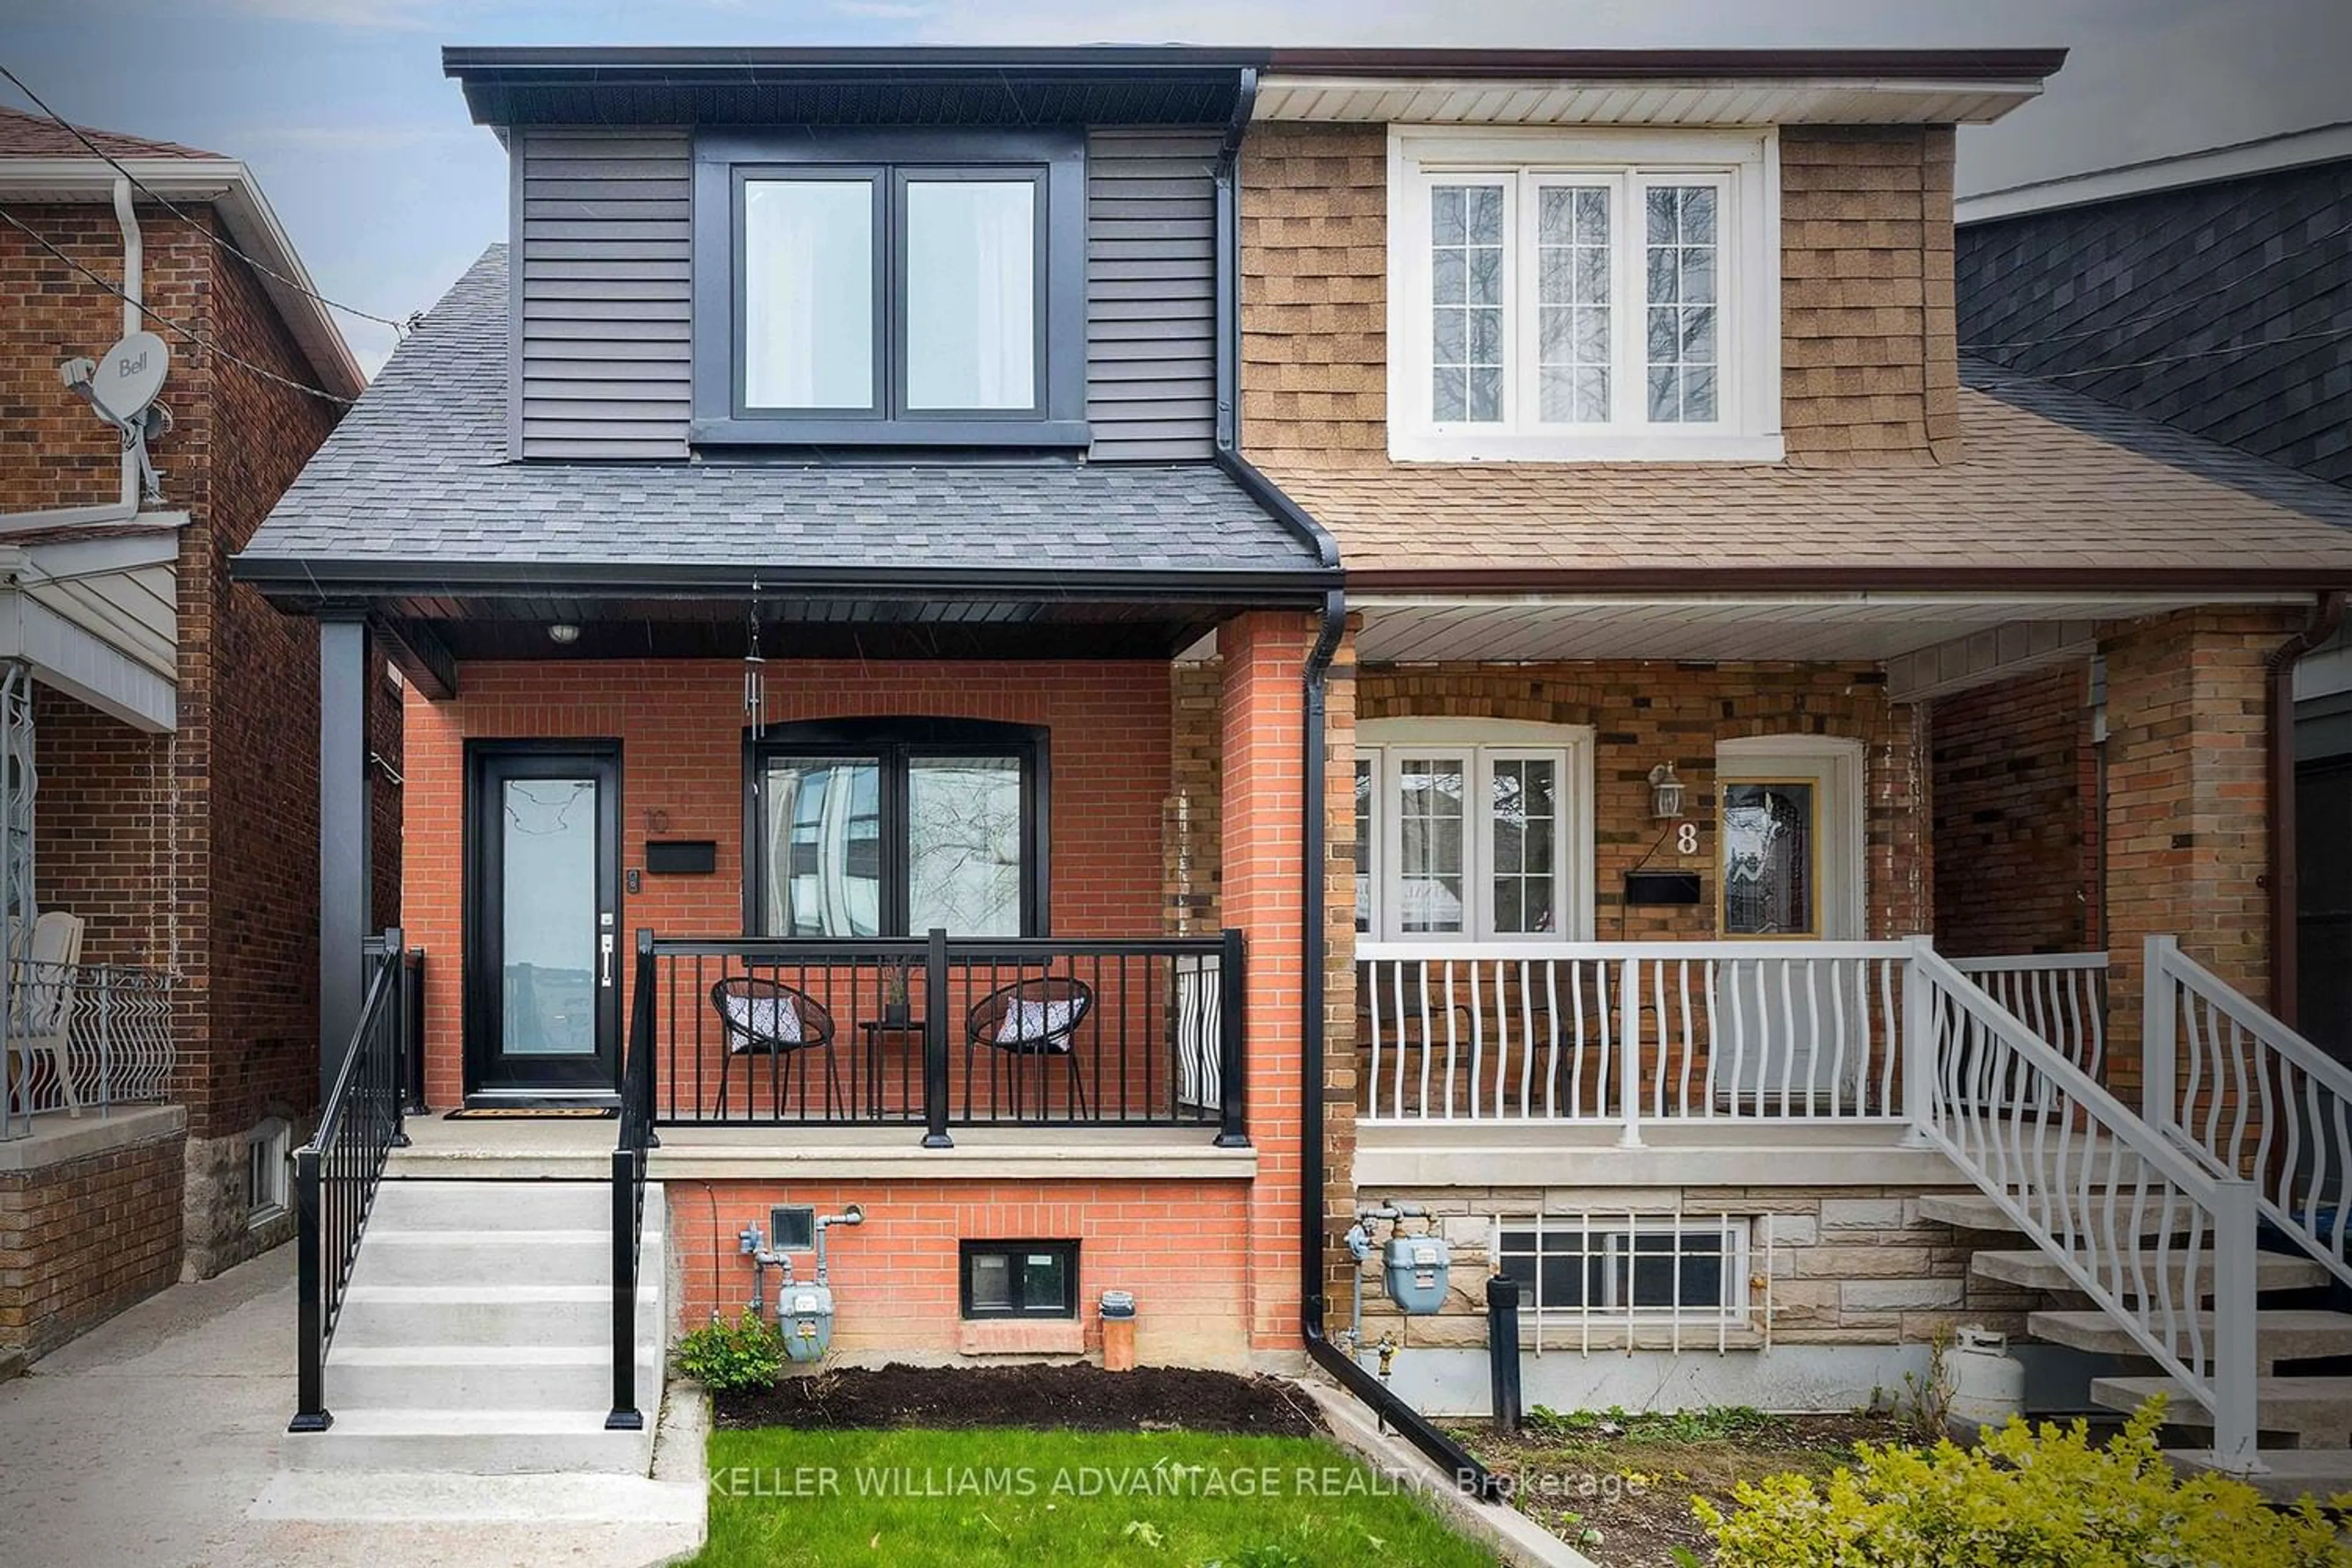 Home with brick exterior material for 10 Innes Ave, Toronto Ontario M6E 1M8